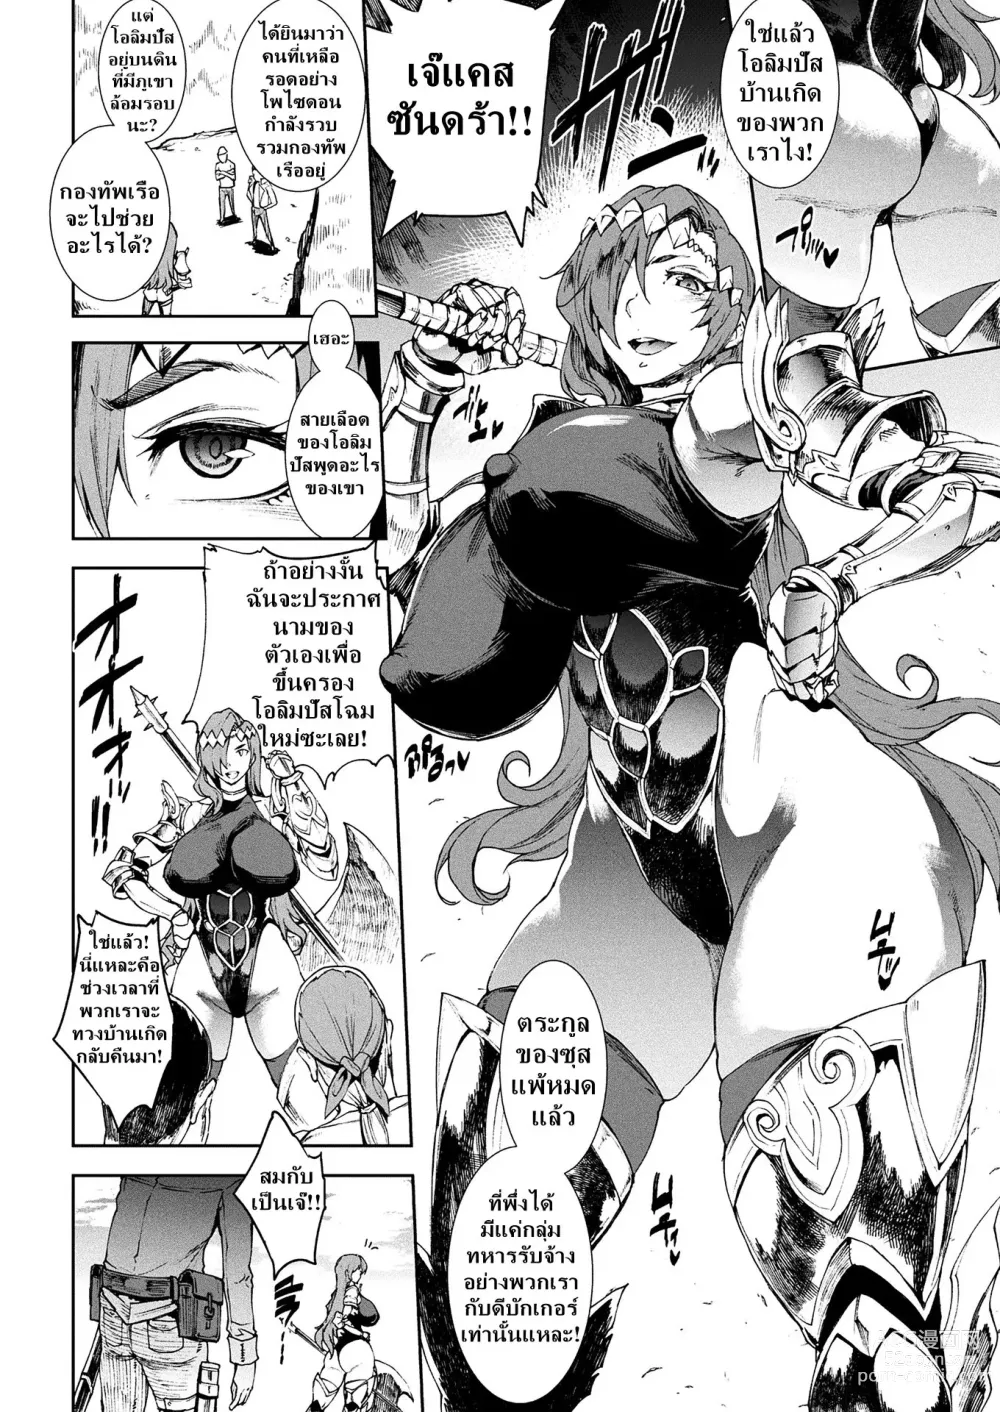 Page 8 of manga Raikou Shinki Igis Magia III -PANDRA saga 3rd ignition-